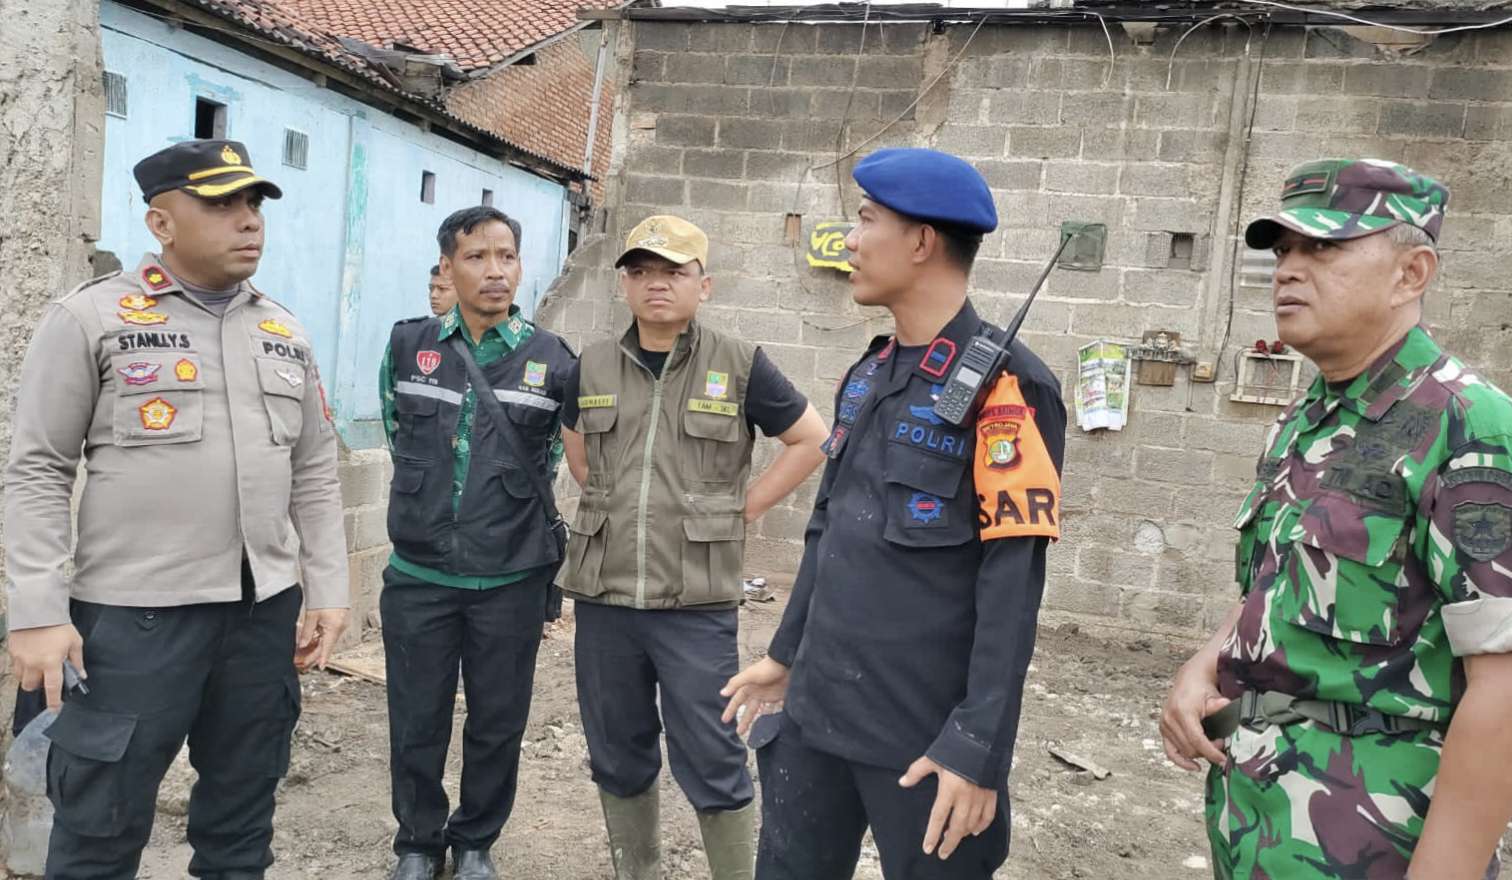 340 Rumah di Tambun Bekasi Dihantam Angin Puting Beliung, Penyaluran Bantuan dan Perbaikan Mulai Dilakukan